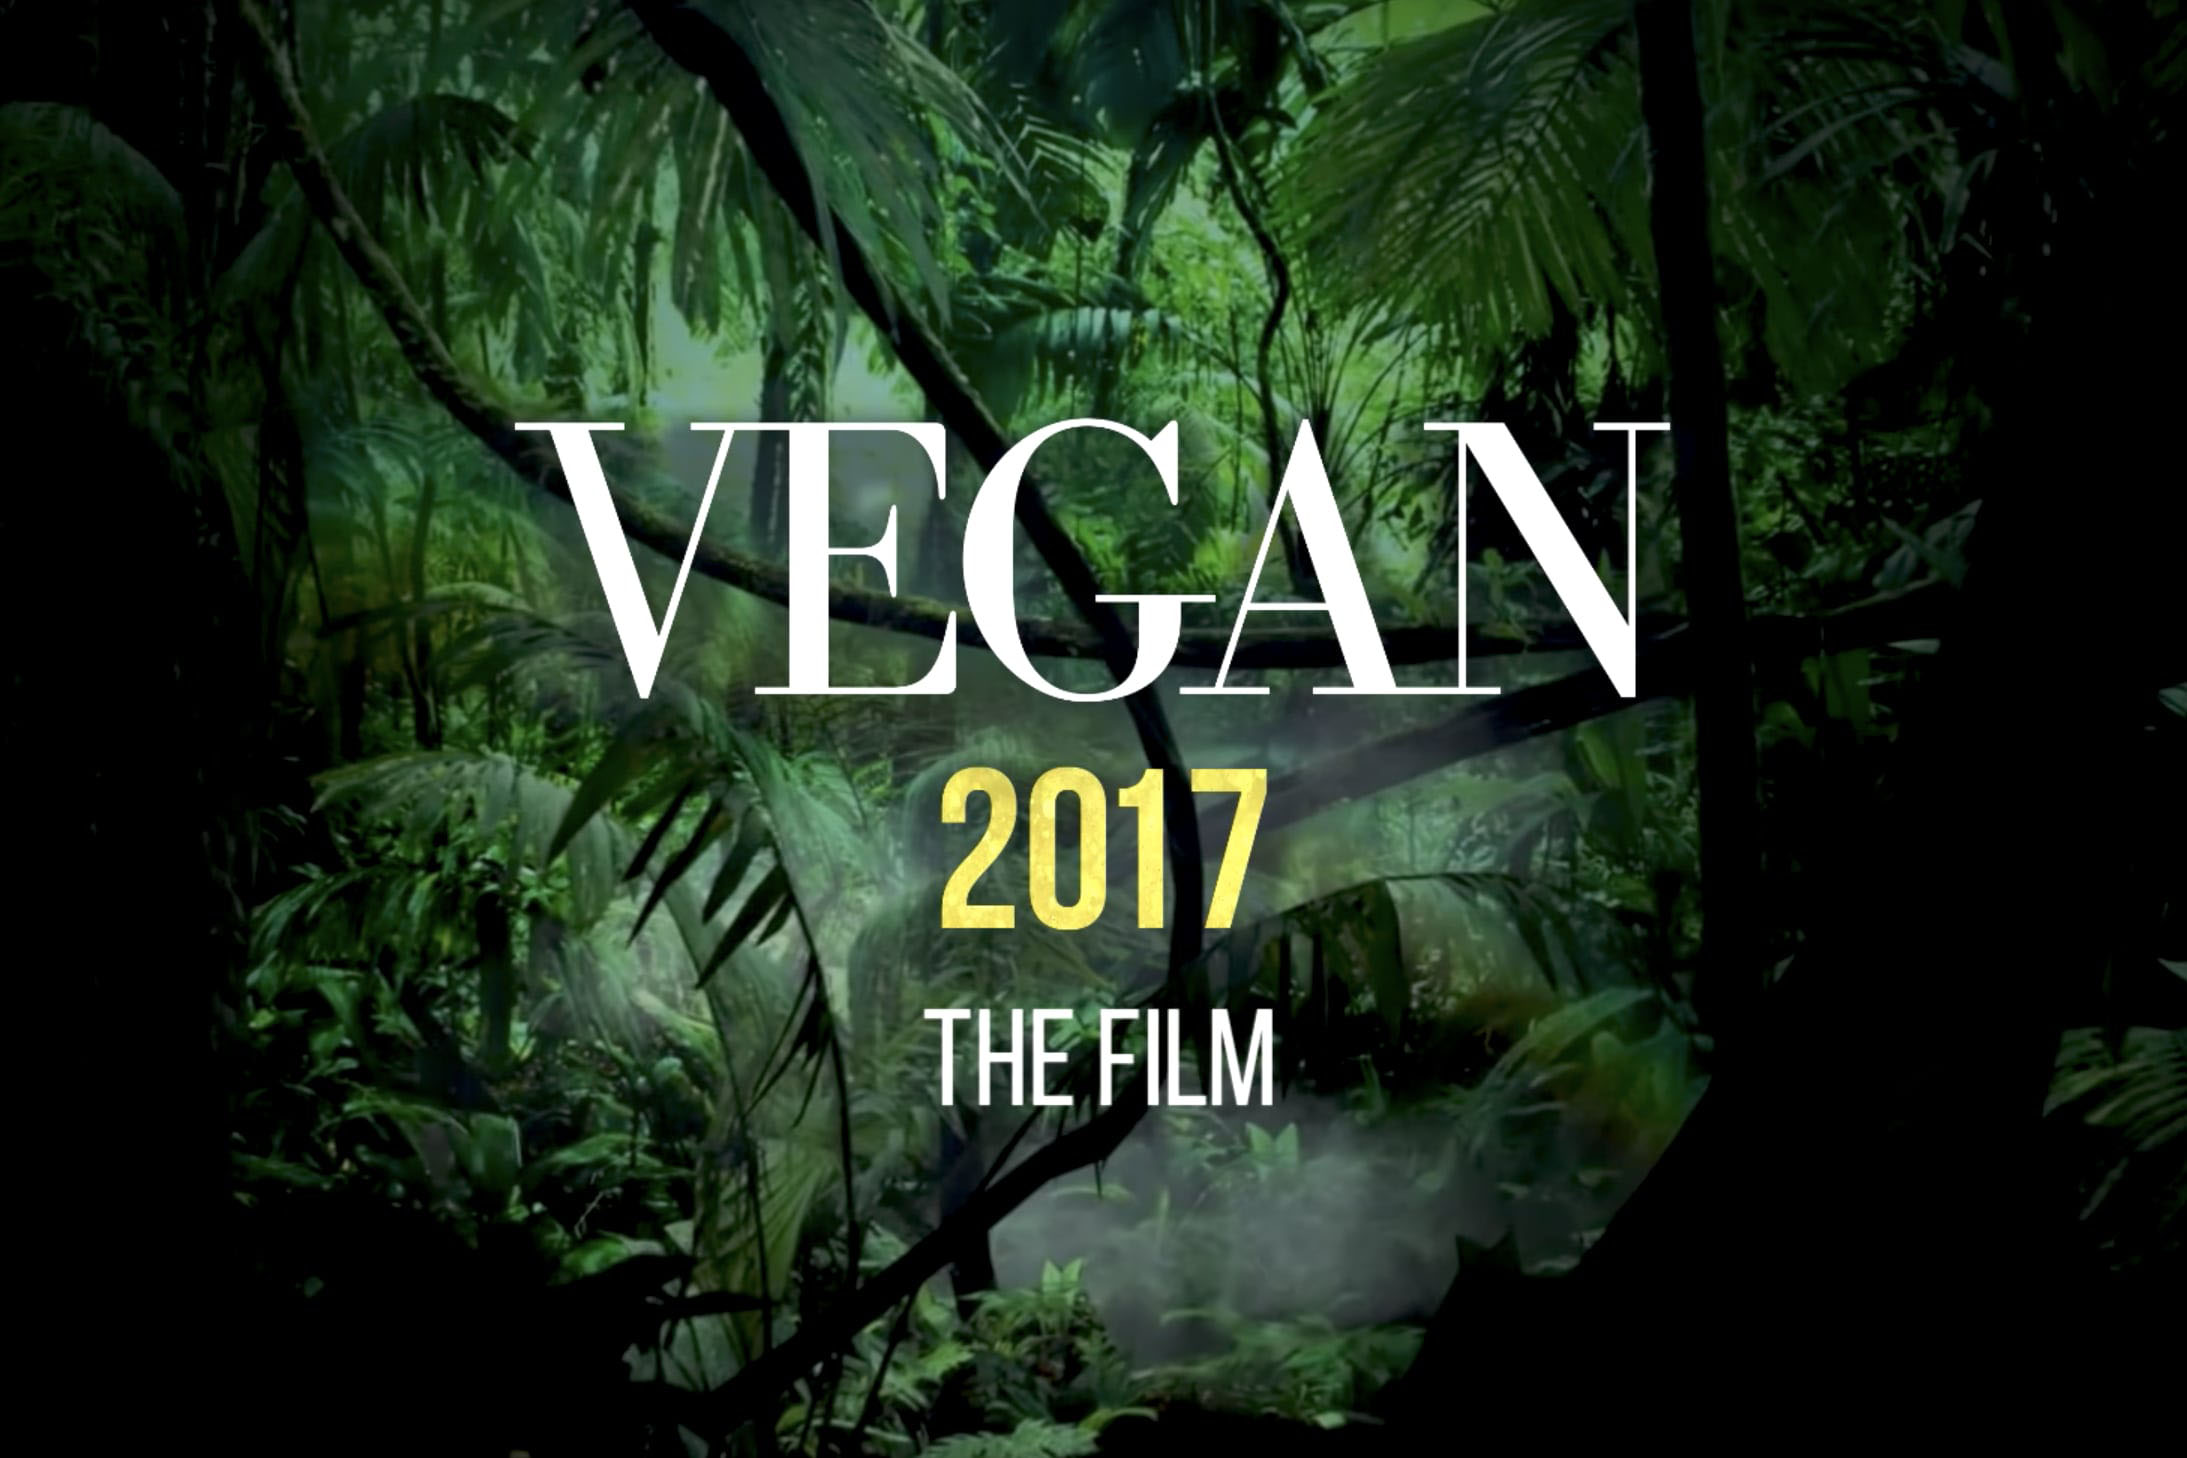 Vegan 2017